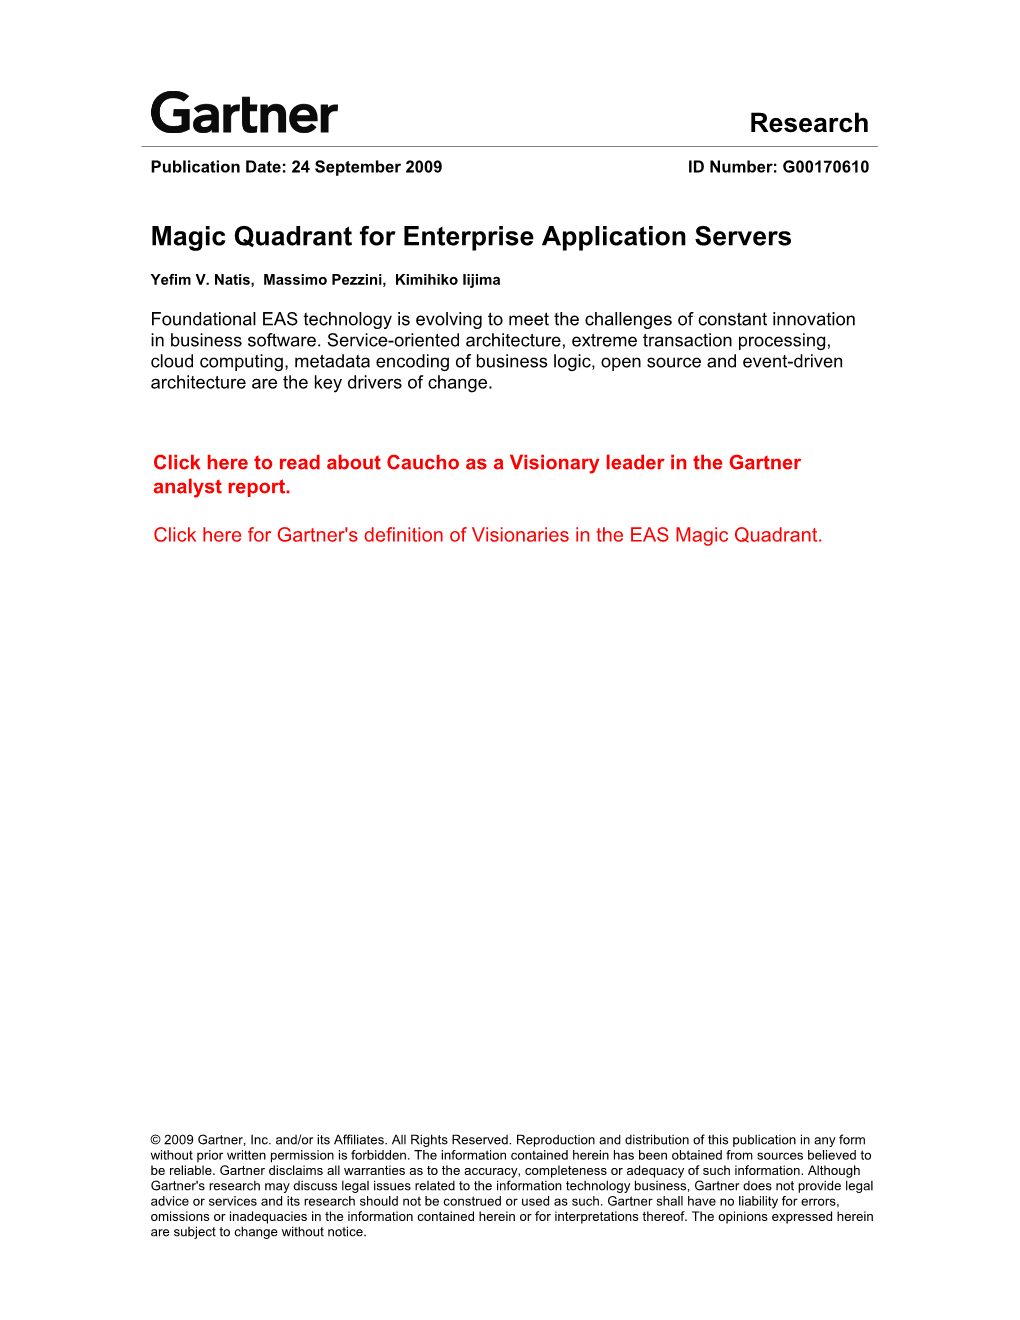 Magic Quadrant for Enterprise Application Servers